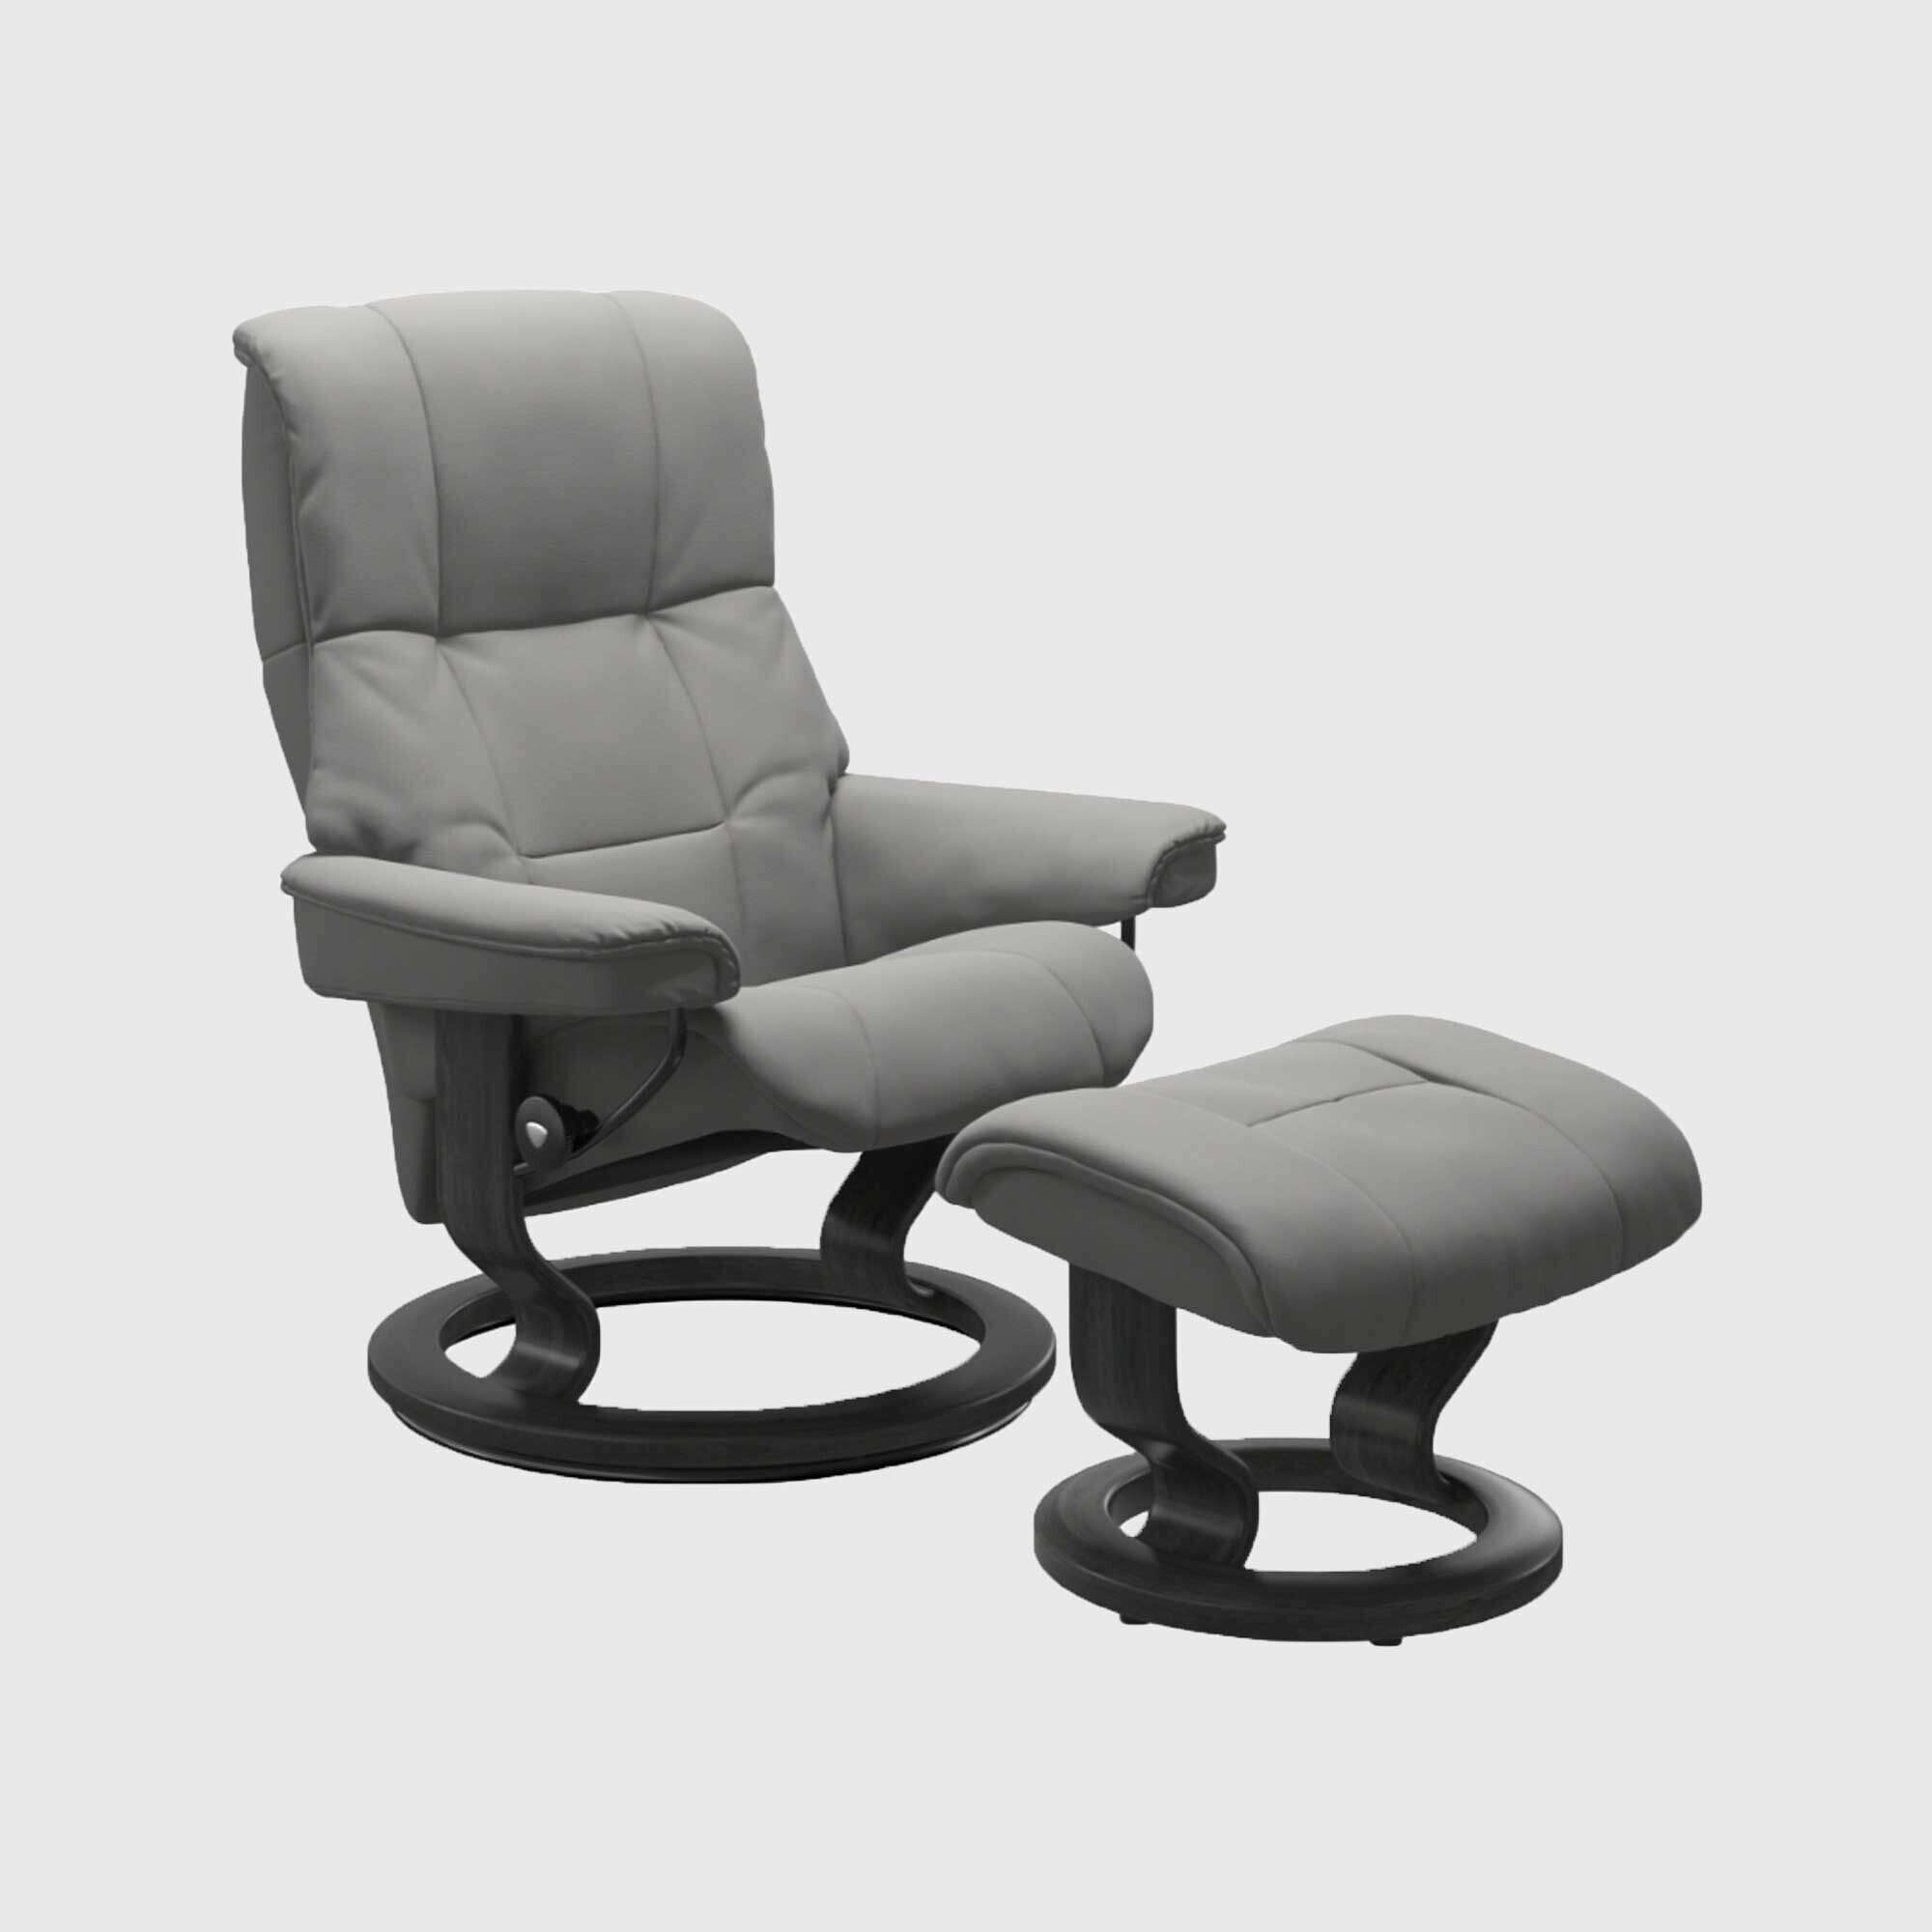 Stressless Mayfair Medium Recliner Chair & Stool, Grey Leather - Barker & Stonehouse - image 1